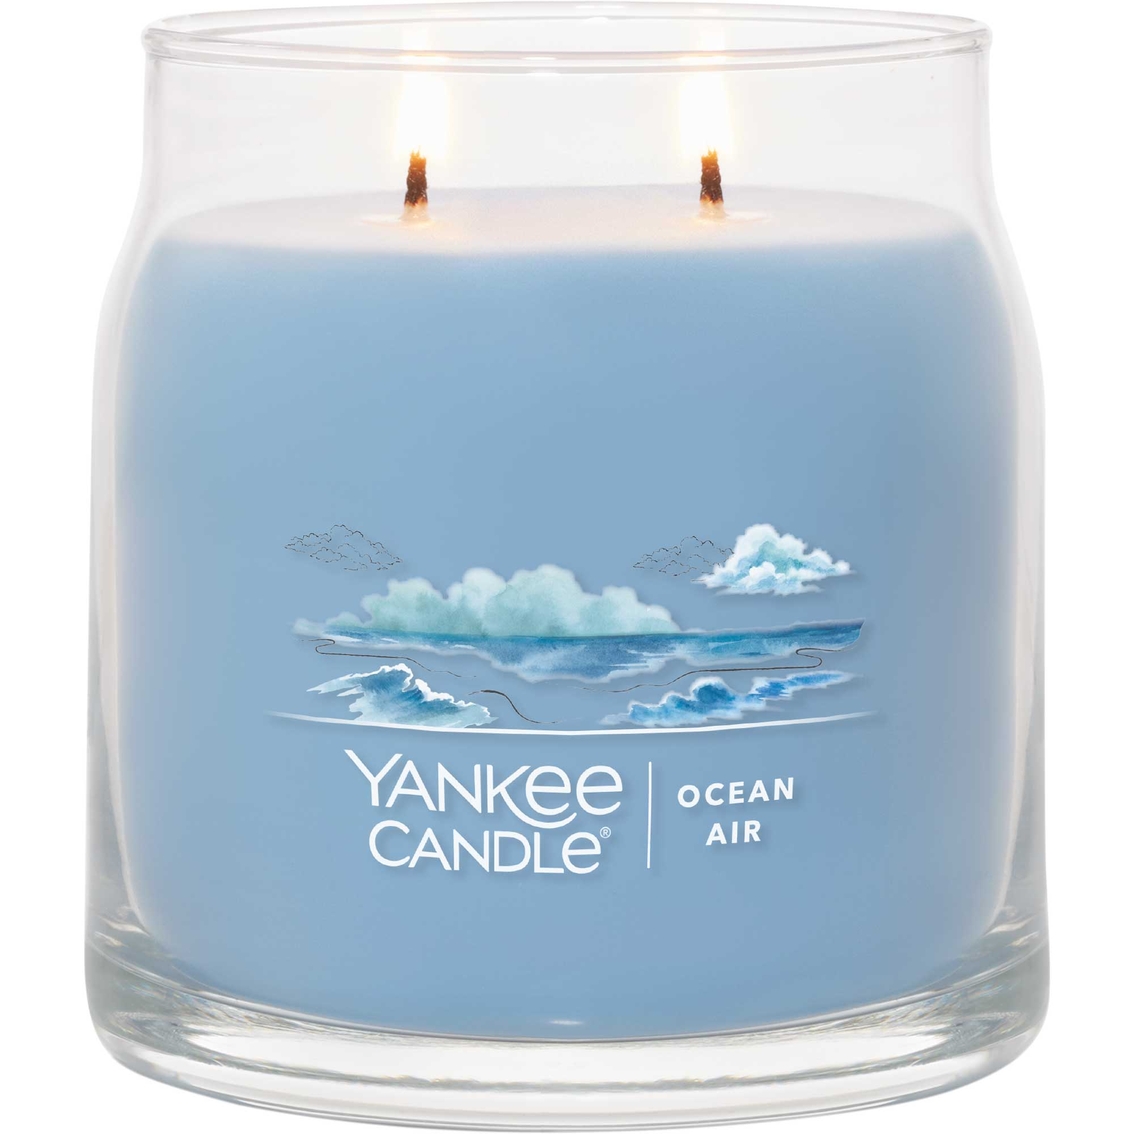 Yankee Candle Ocean Air Signature Medium Jar Candle - Image 2 of 2